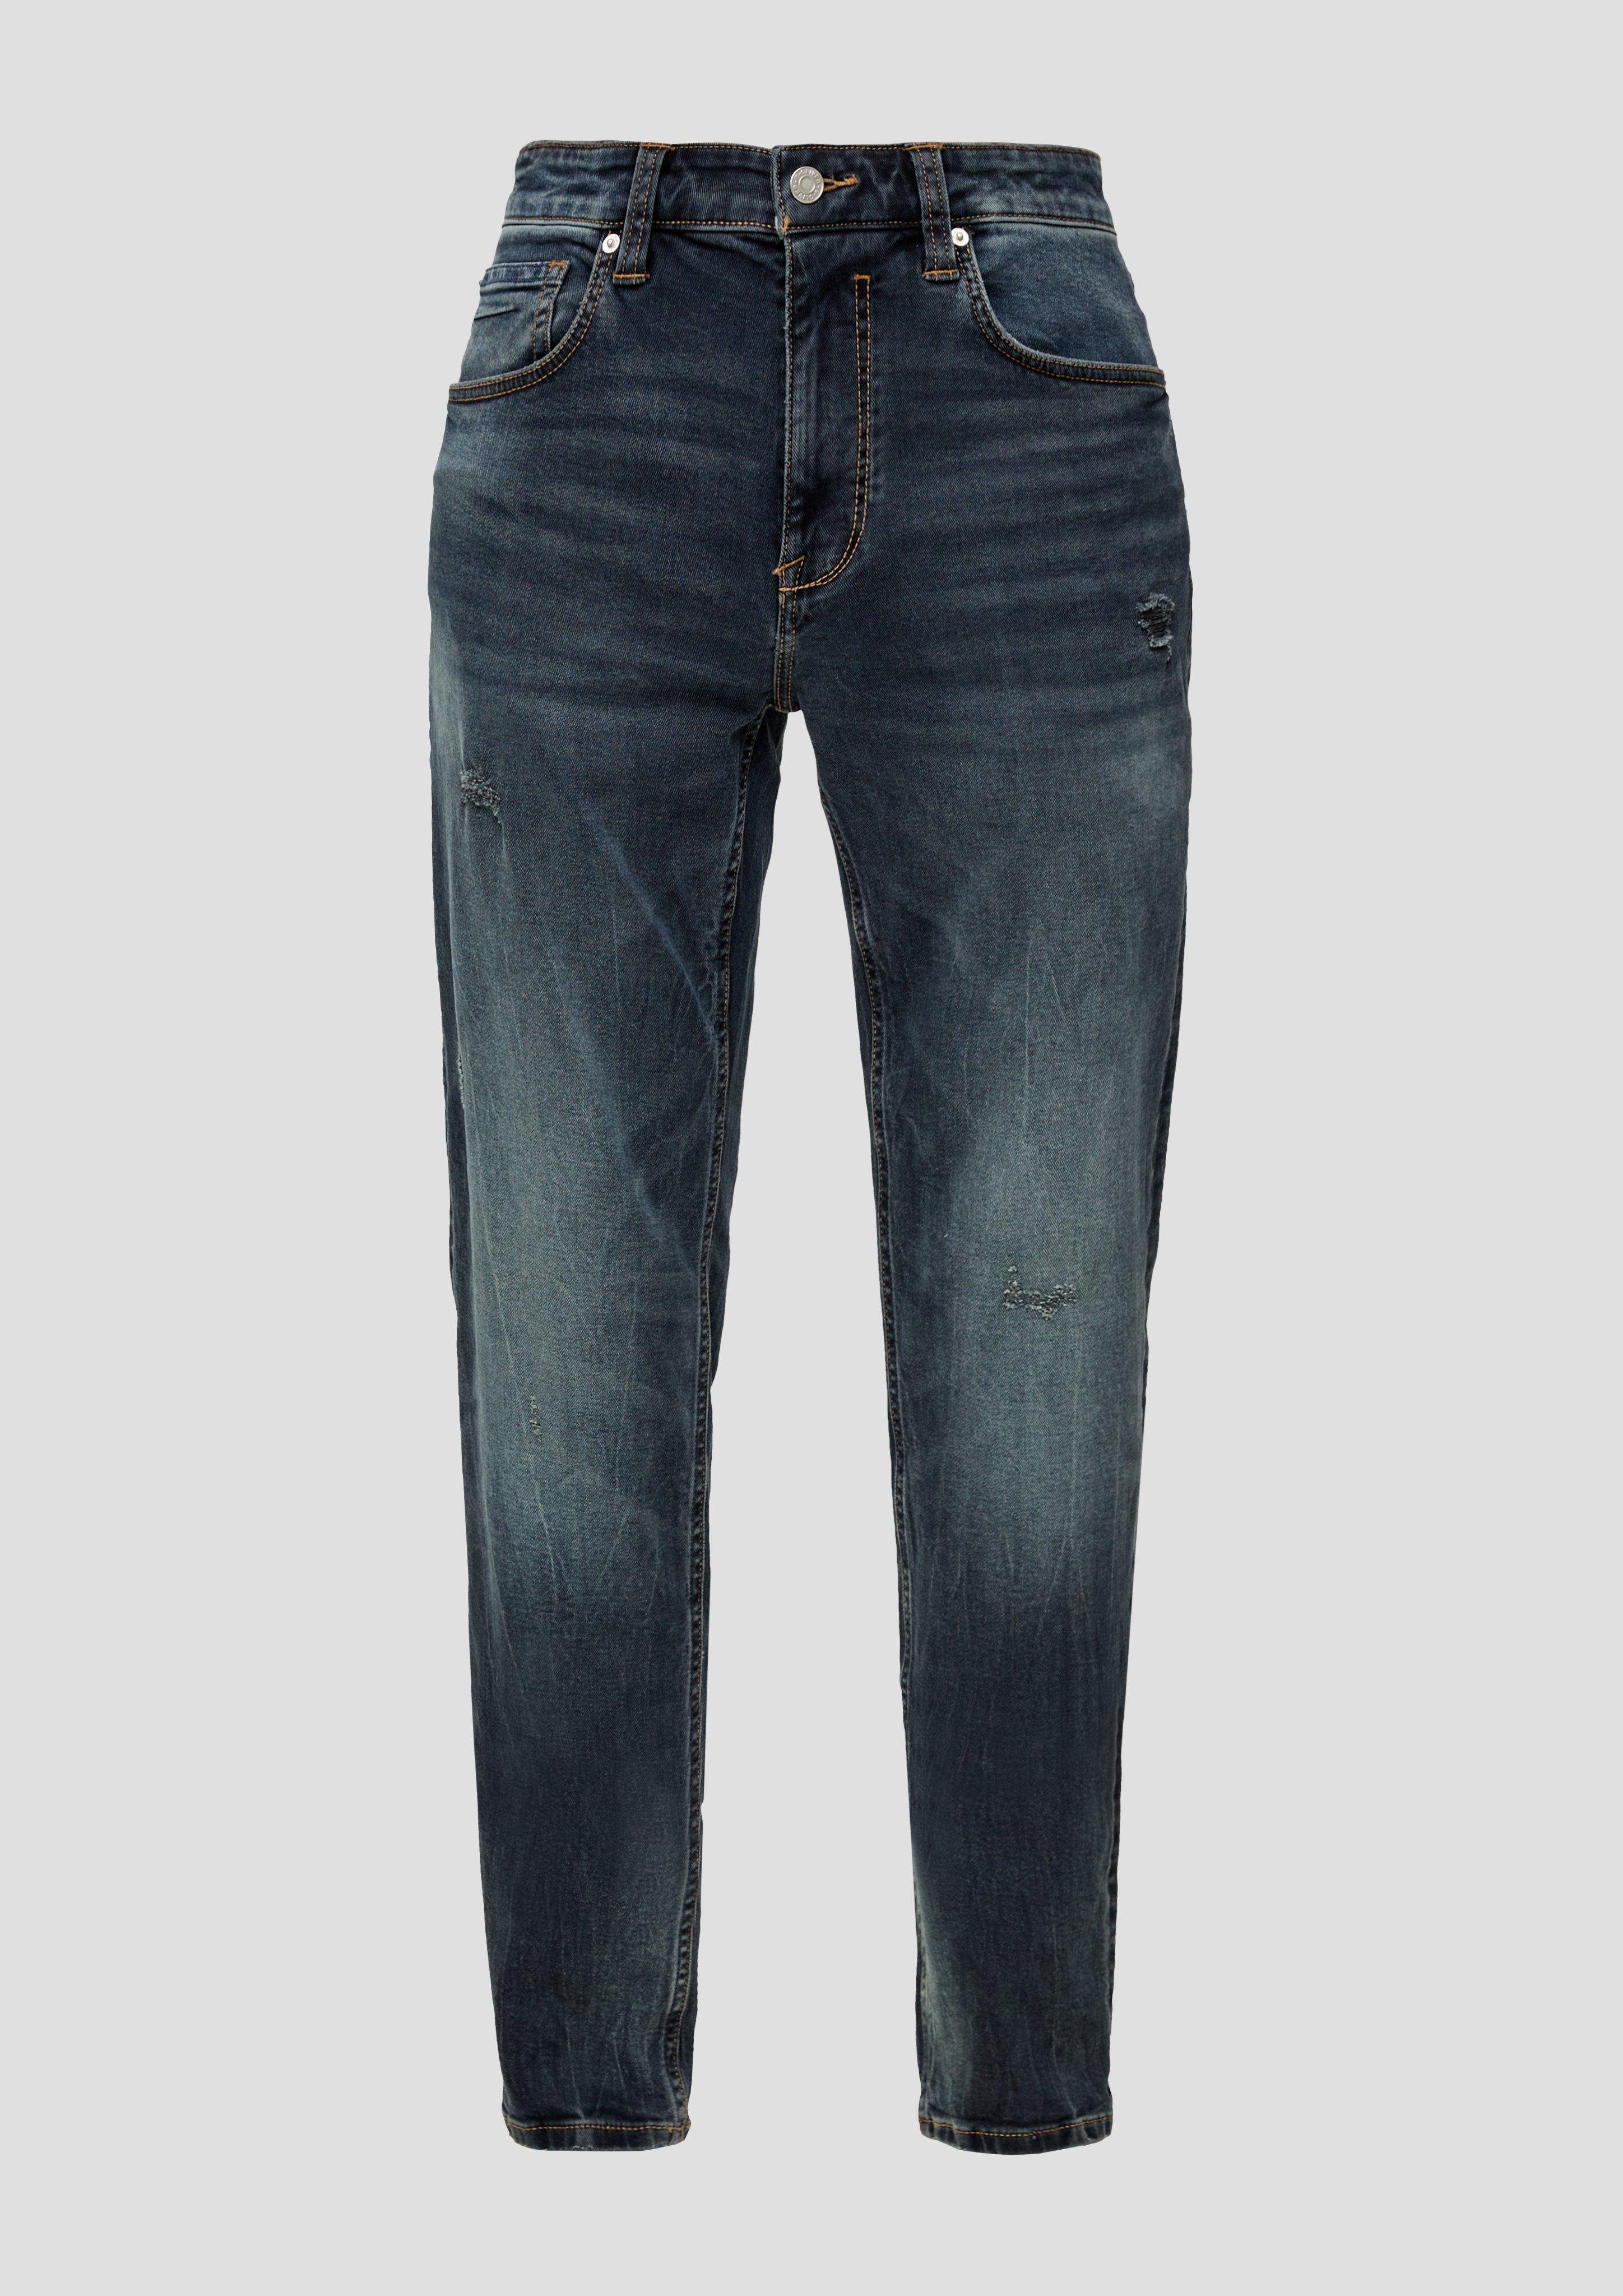 / Jeans s.Oliver Slim Slim Nelio Stoffhose dunkelblau / Mid Label-Patch, Leg Fit Destroyes / Rise